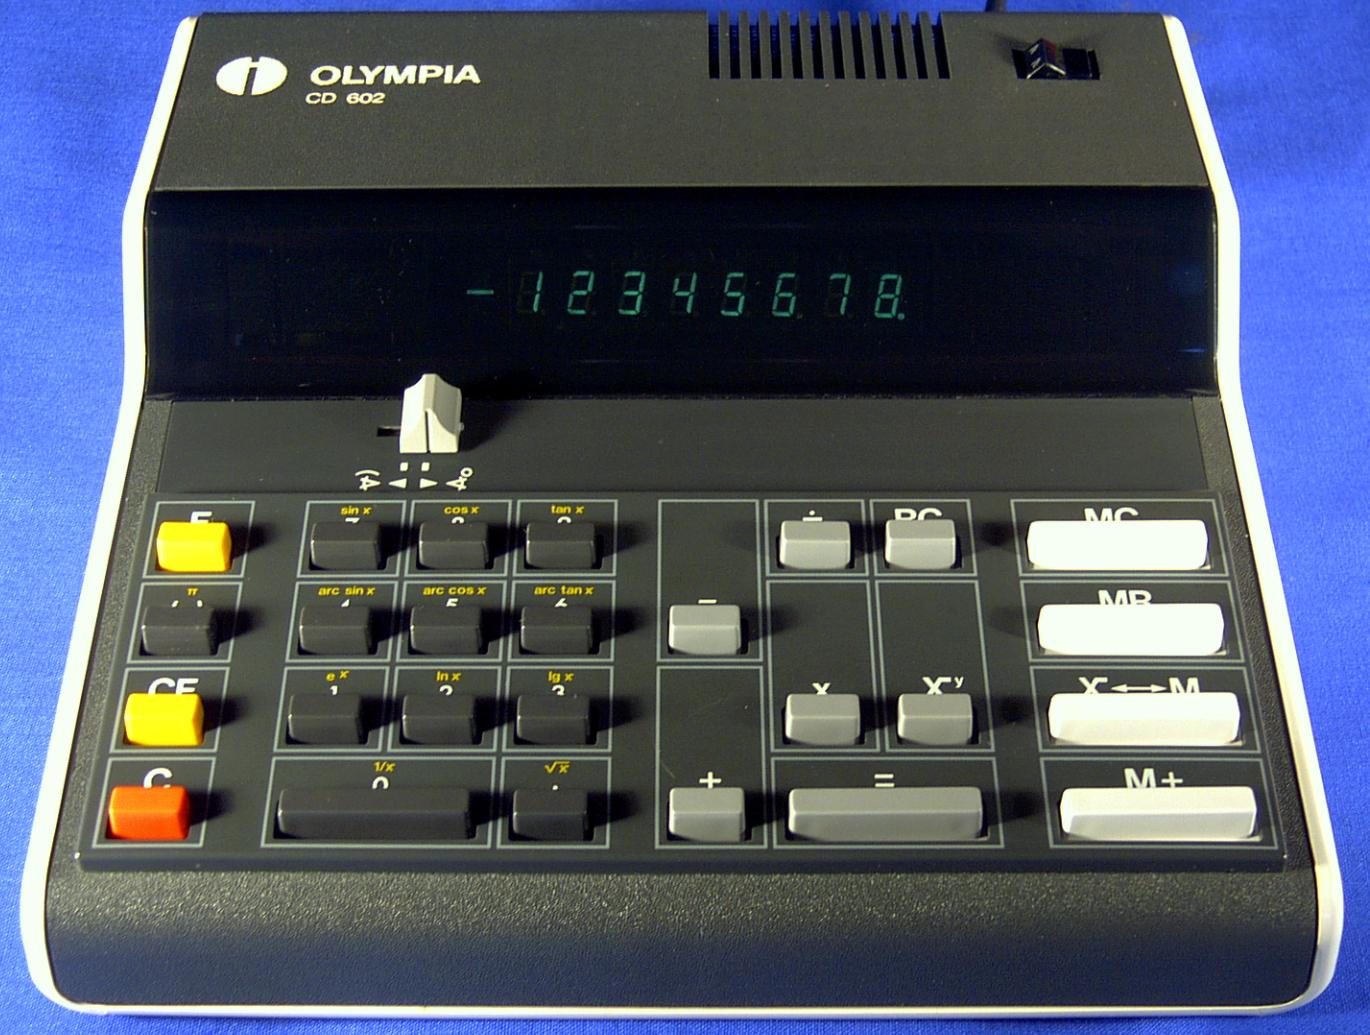 Olympia CD 602